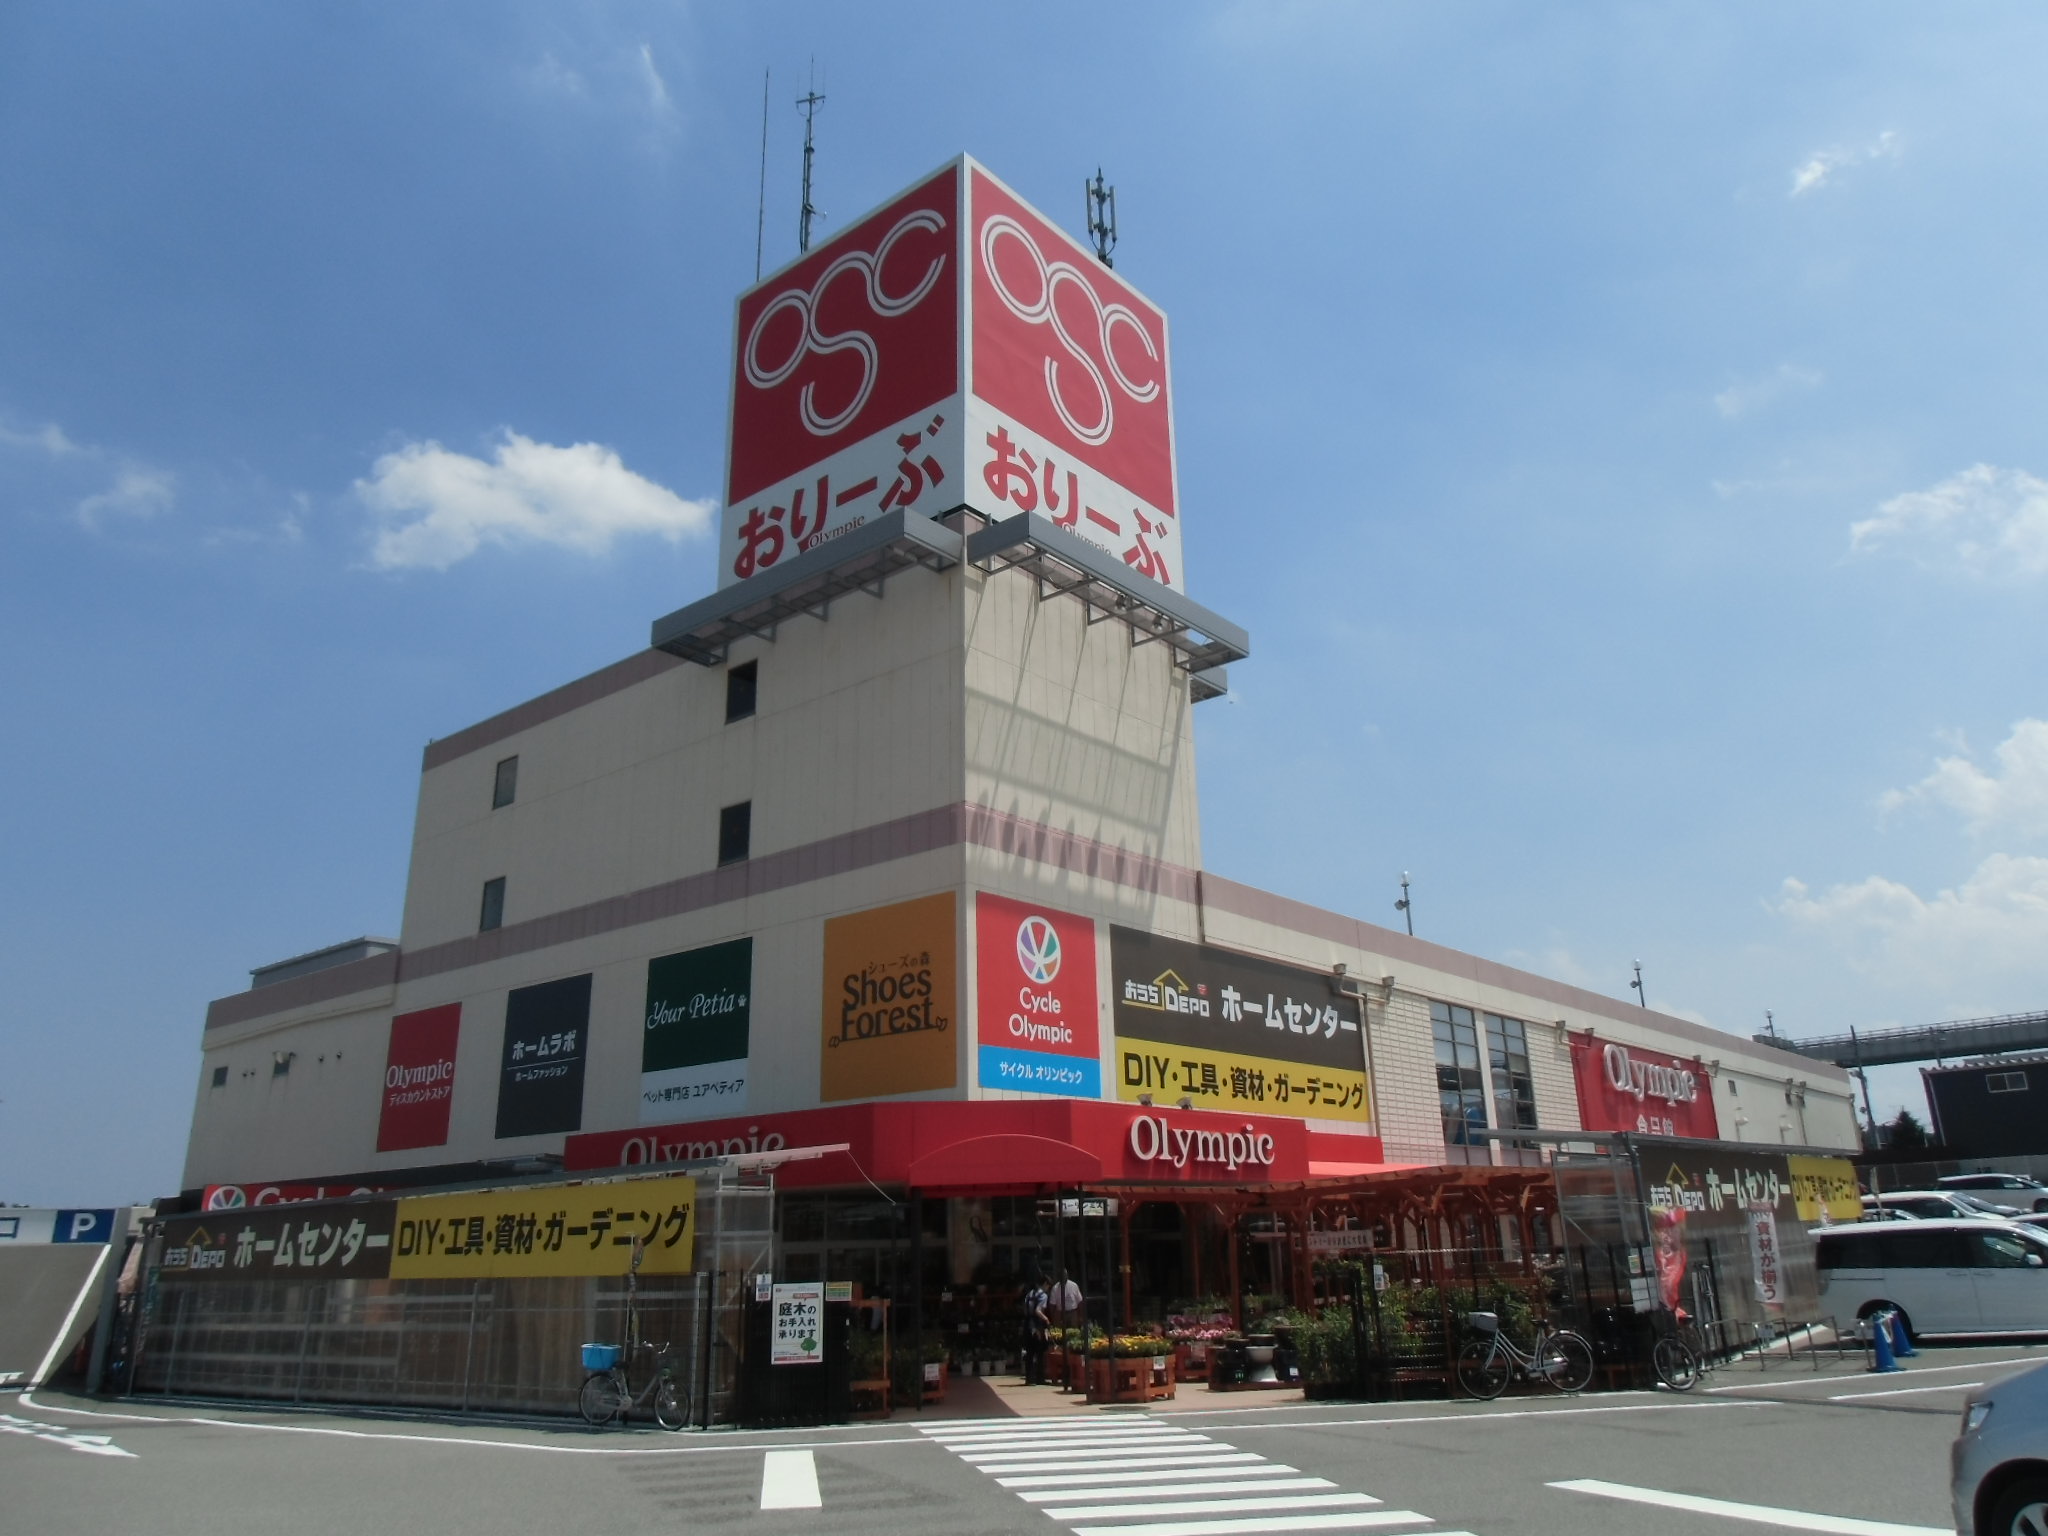 Supermarket. Olympic hypermarket Chiba Sakuragi store up to (super) 767m